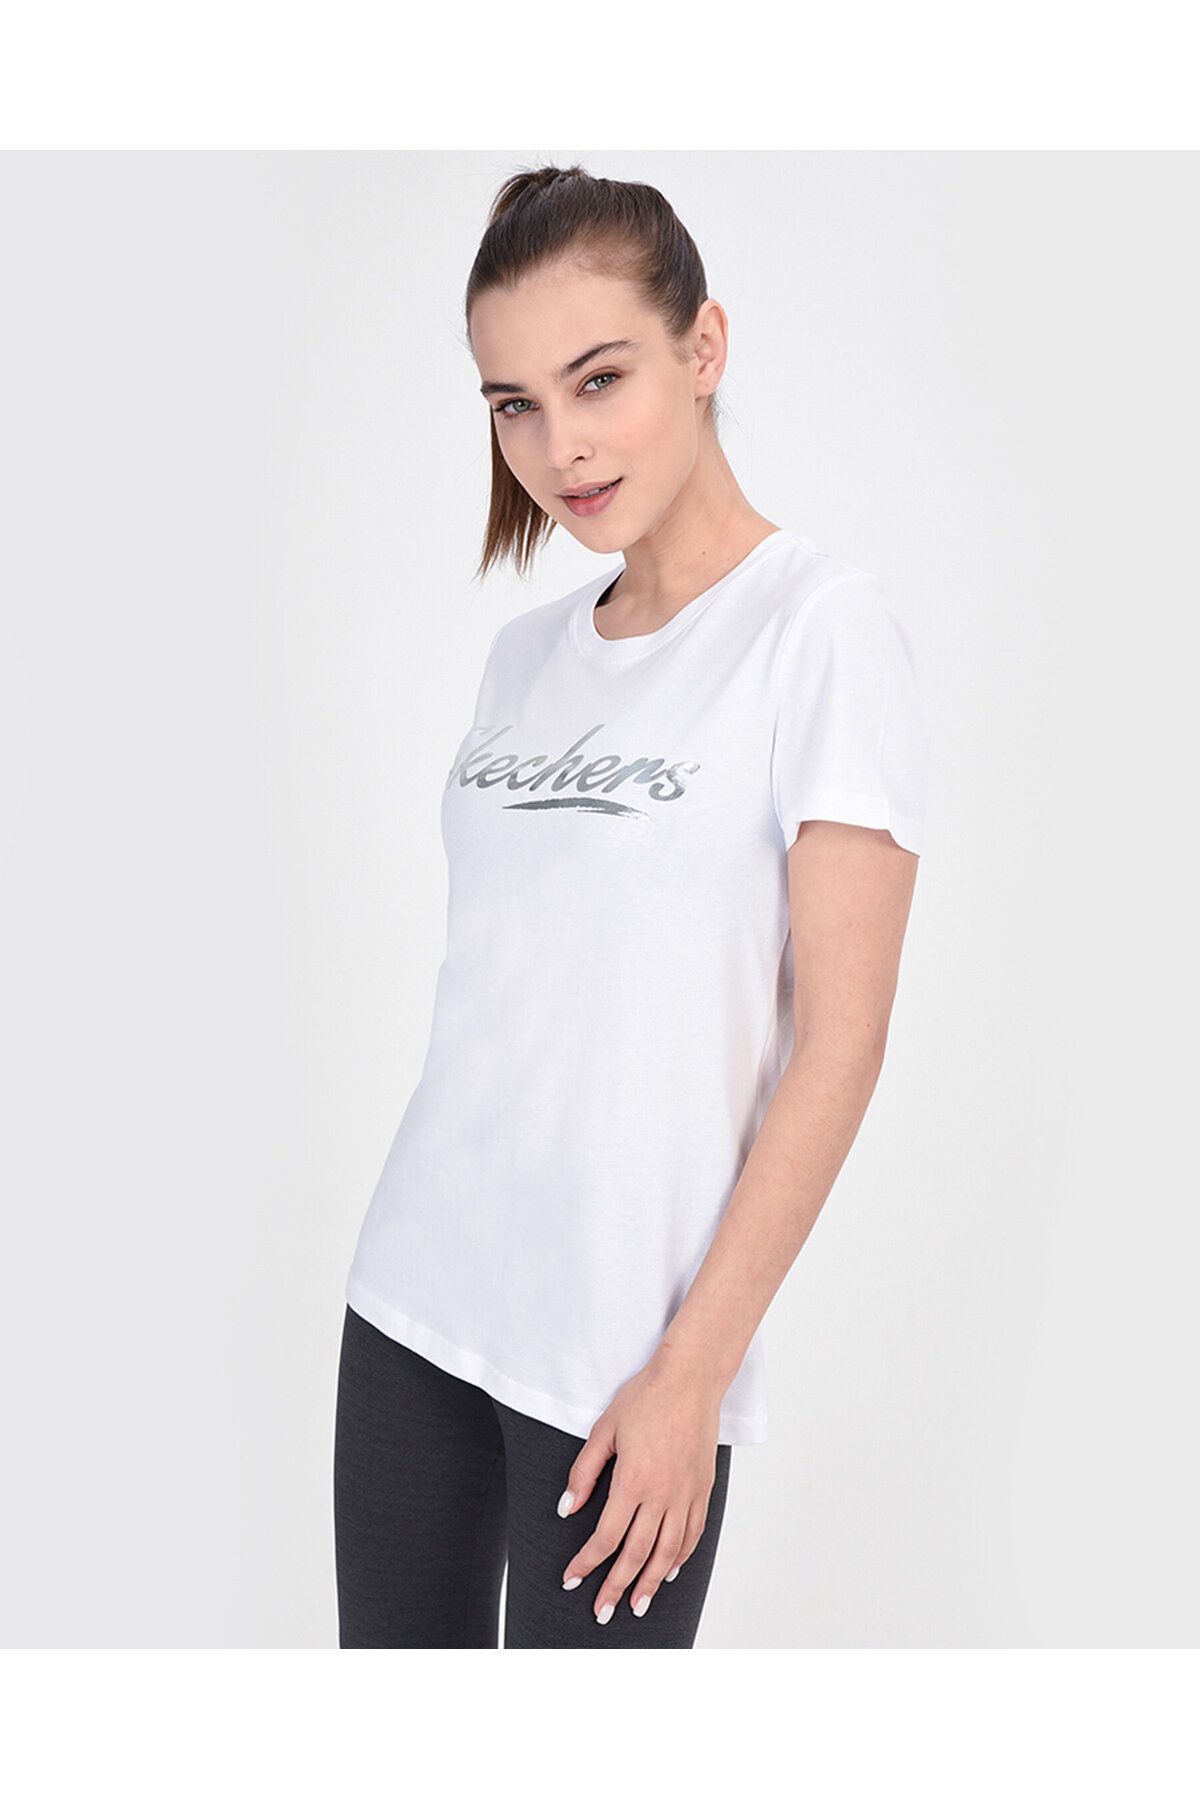 Skechers Graphic Tee's W Shine Up Logo Kadın Beyaz Tshirt S201272-100